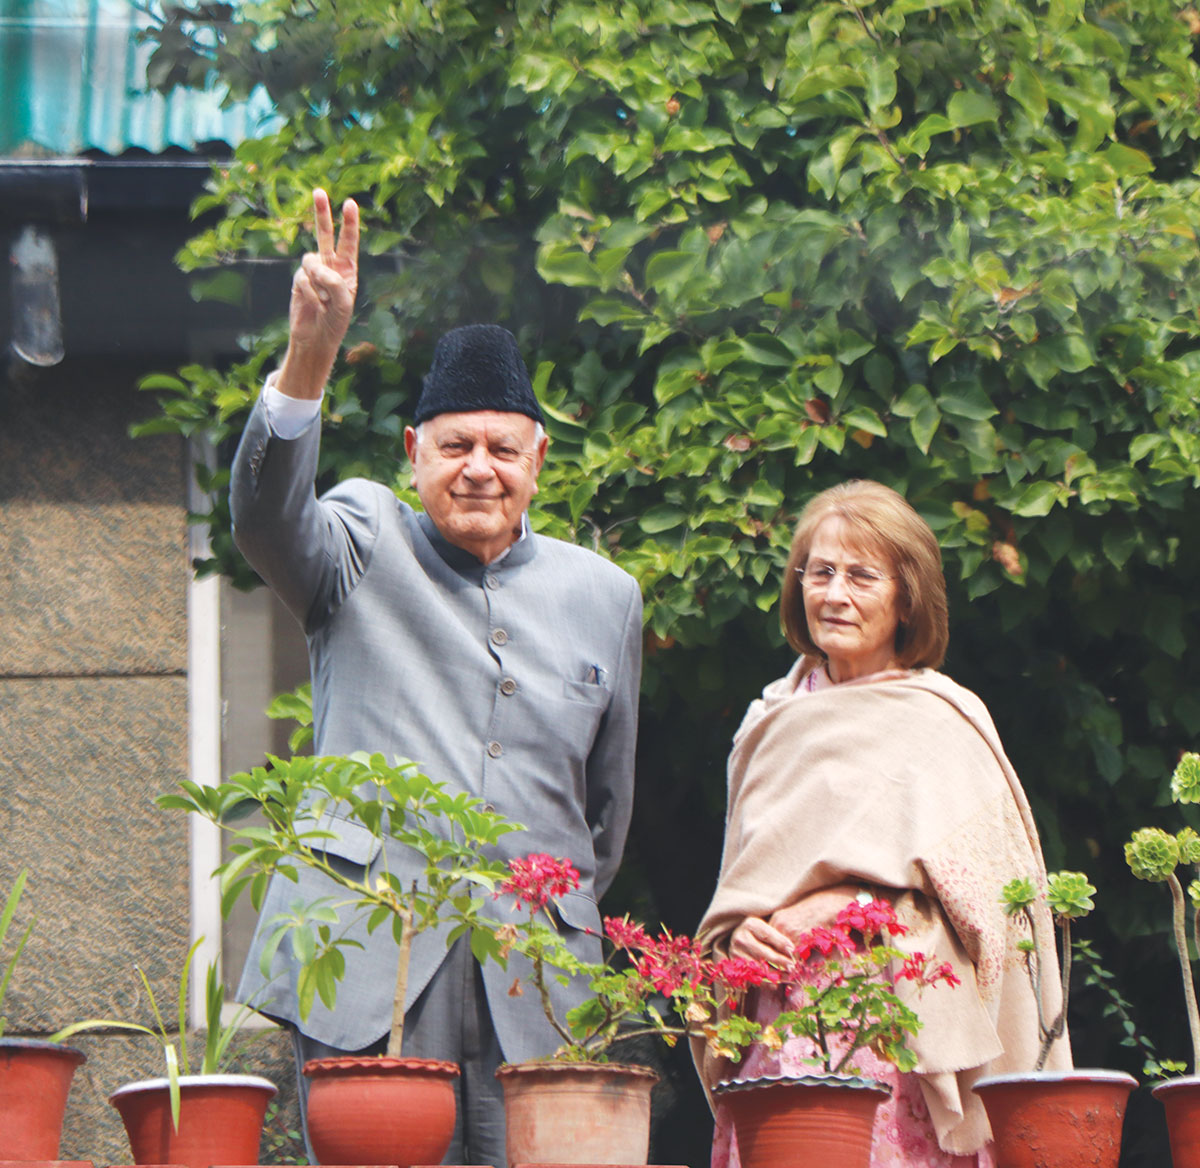 Dr Farooq Abdullah with his wife Molly Abdullah. KL Image by Bilal Bahadur